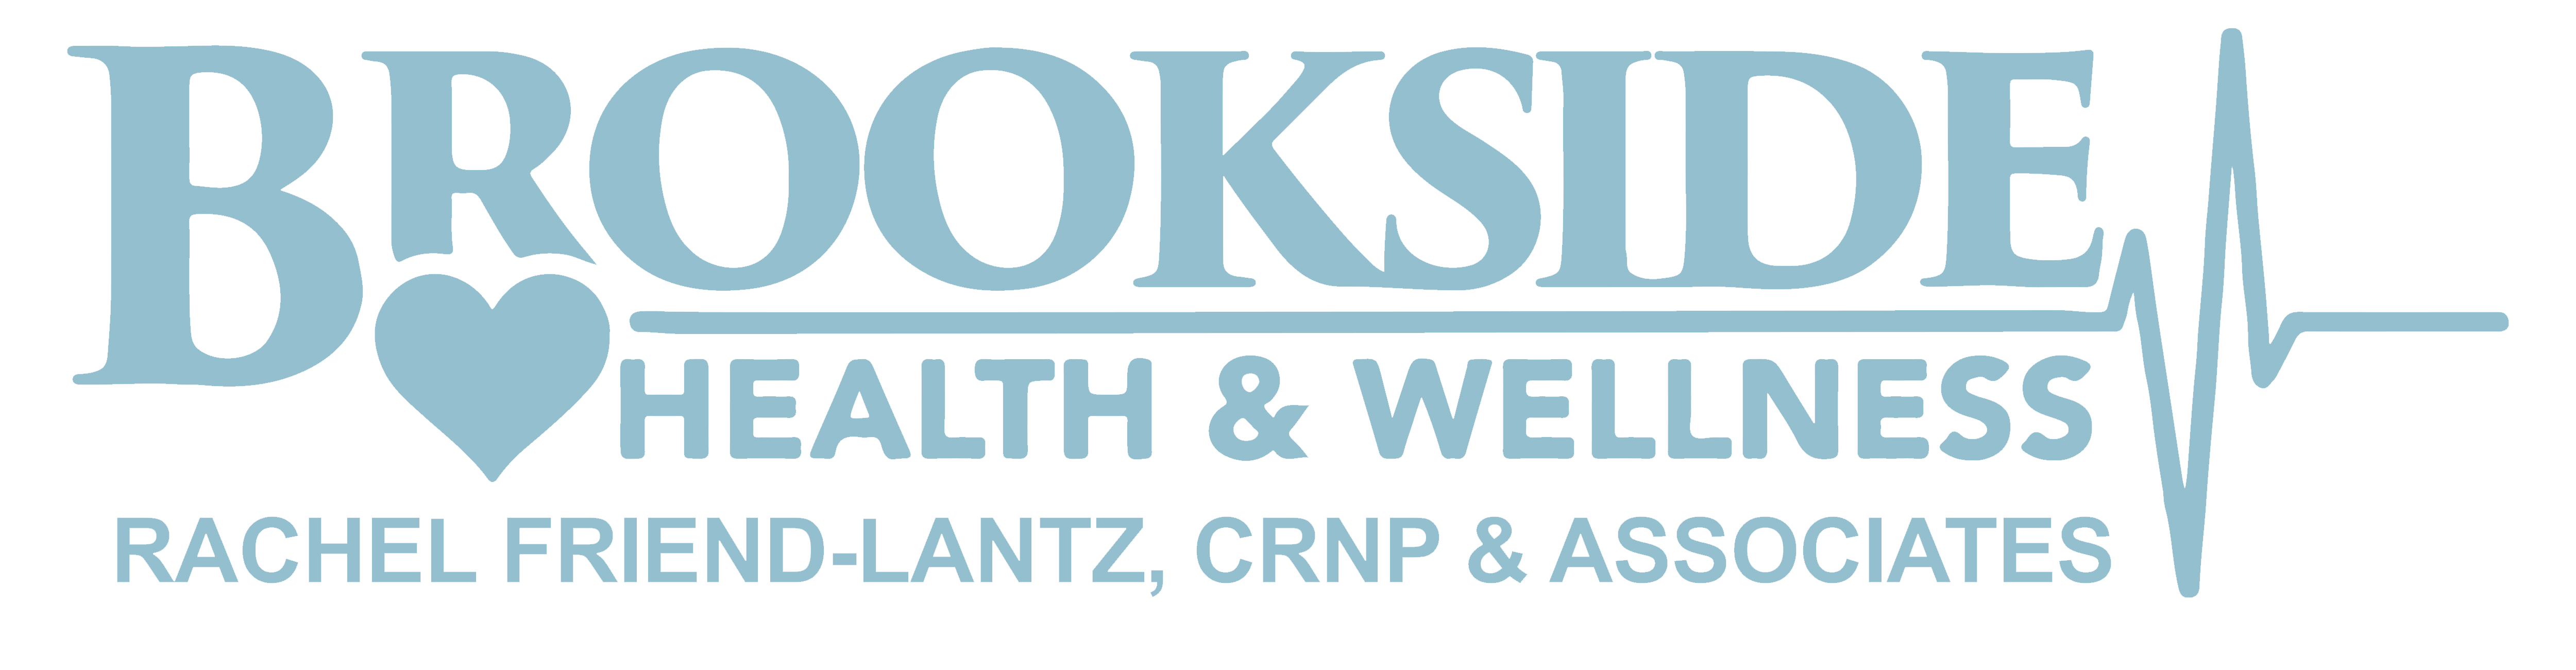 Brookside Health & Wellness